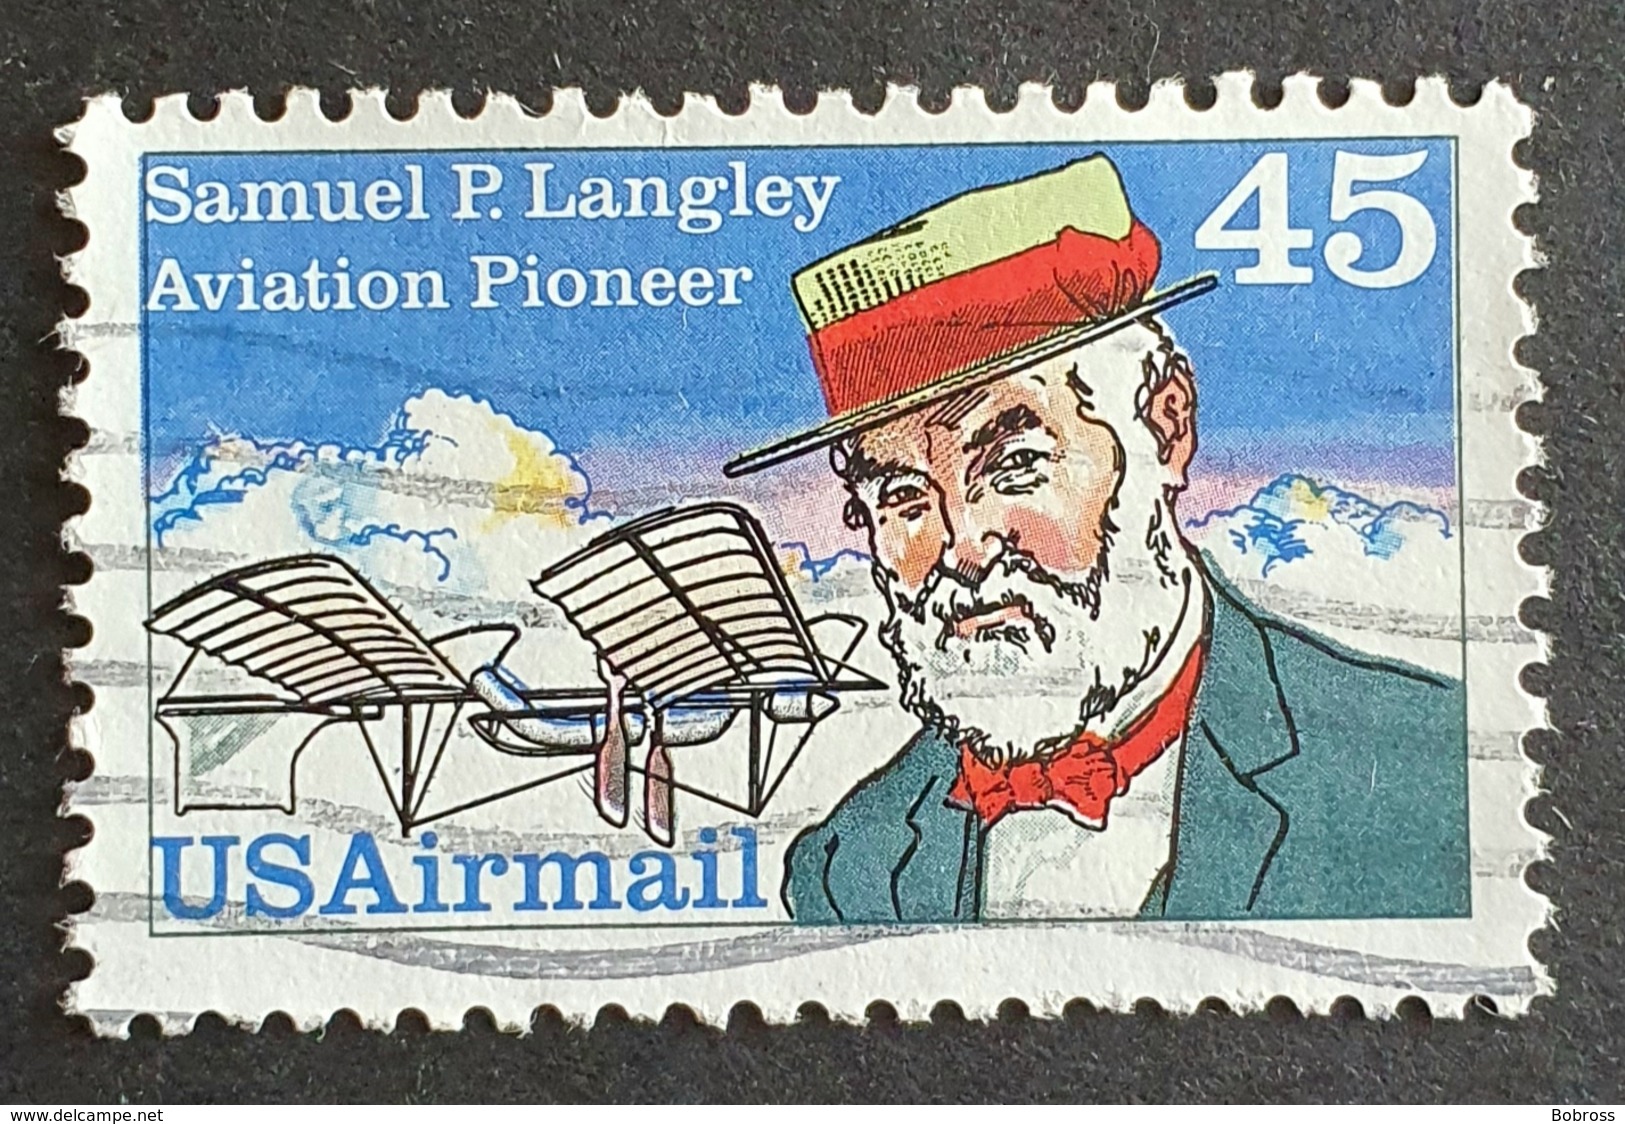 Airmail, #C118, Samuel P. Langley, United States Of America, USA, Used - 2b. 1941-1960 Nuevos